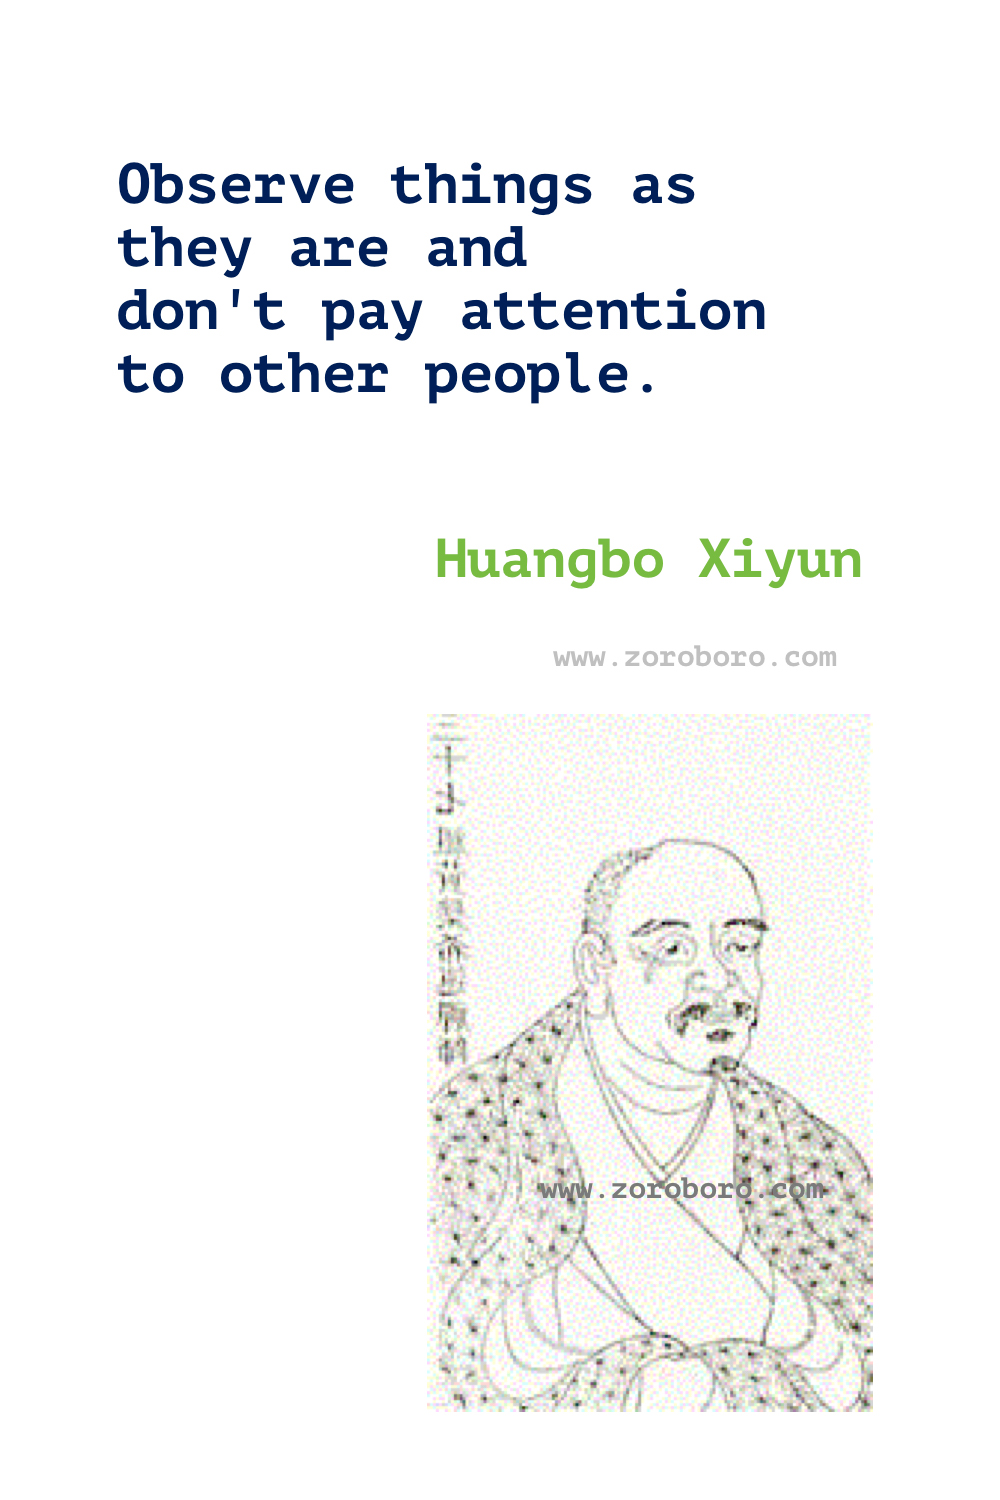 Huangbo Xiyun Quotes. Spiritual, Words Of Wisdom, Dharma, & Mind. Huangbo Xiyun Philosophy. Huangbo Xiyun Quotes.